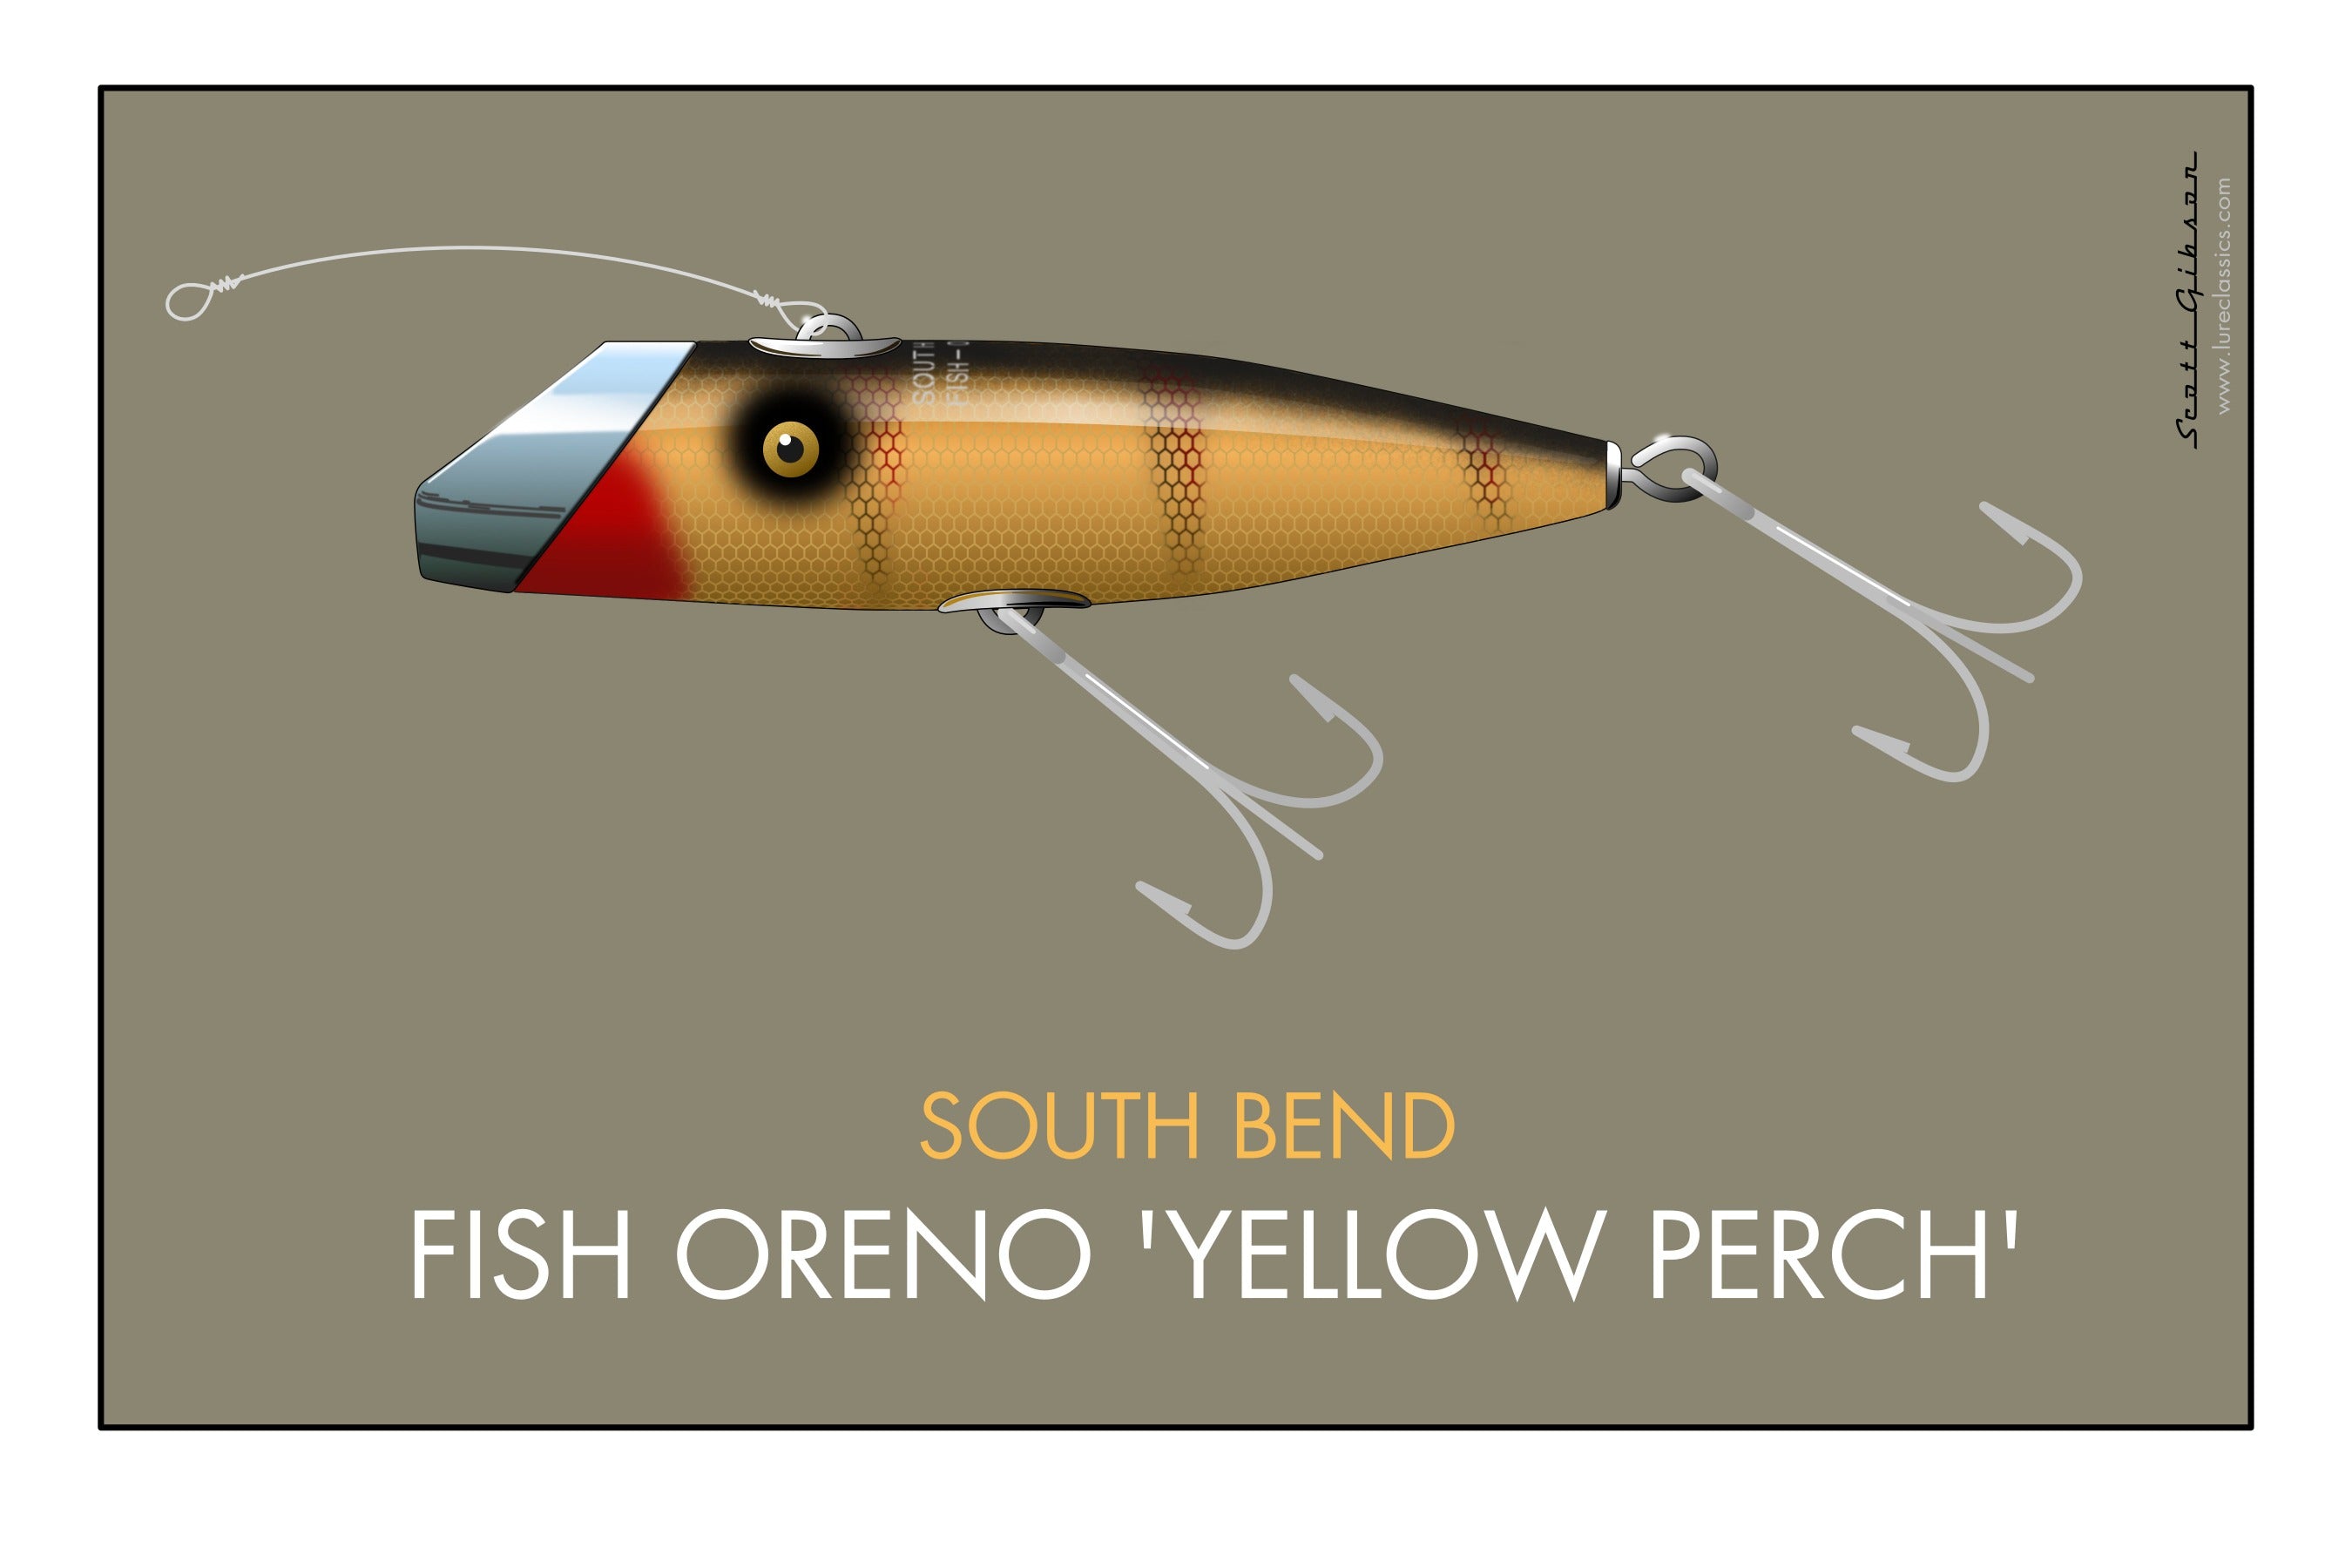 South Bend Fish Oreno 'Yellow Perch